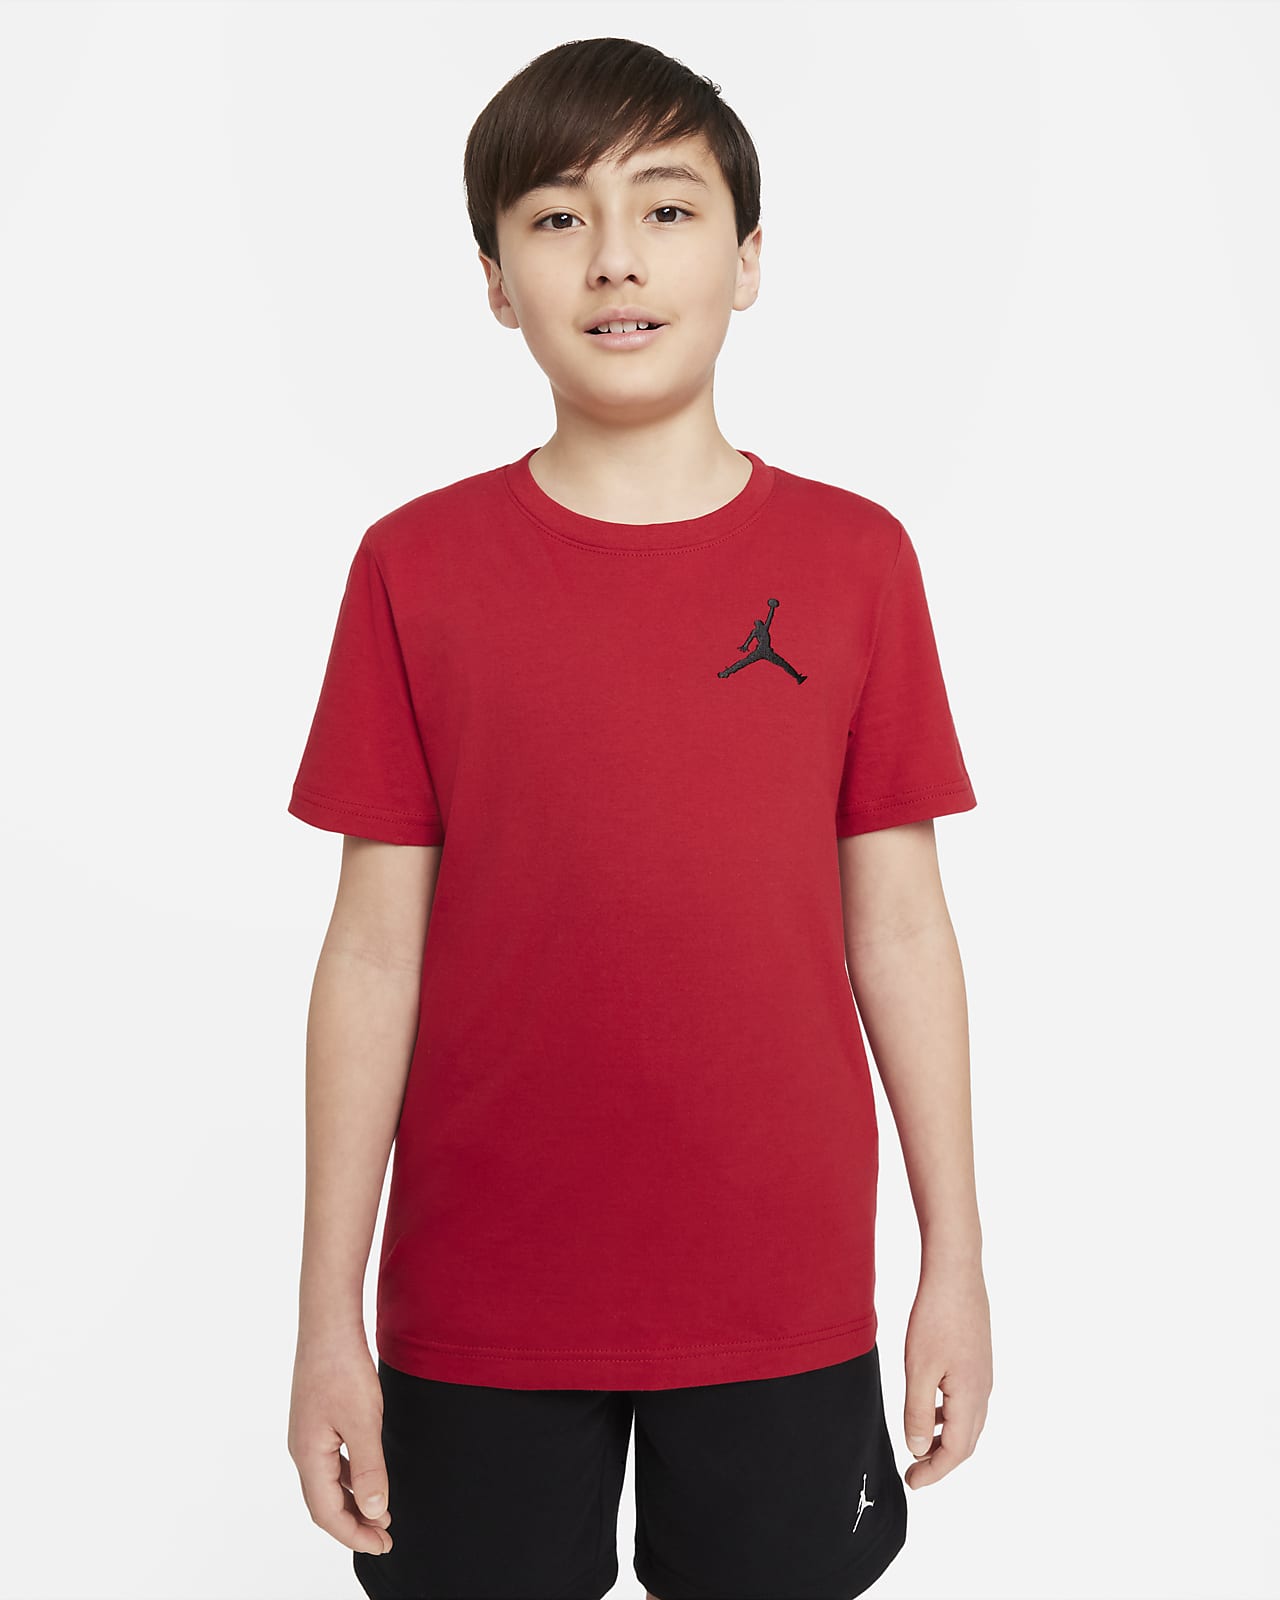 Jordan Older Kids' (Boys') T-Shirt